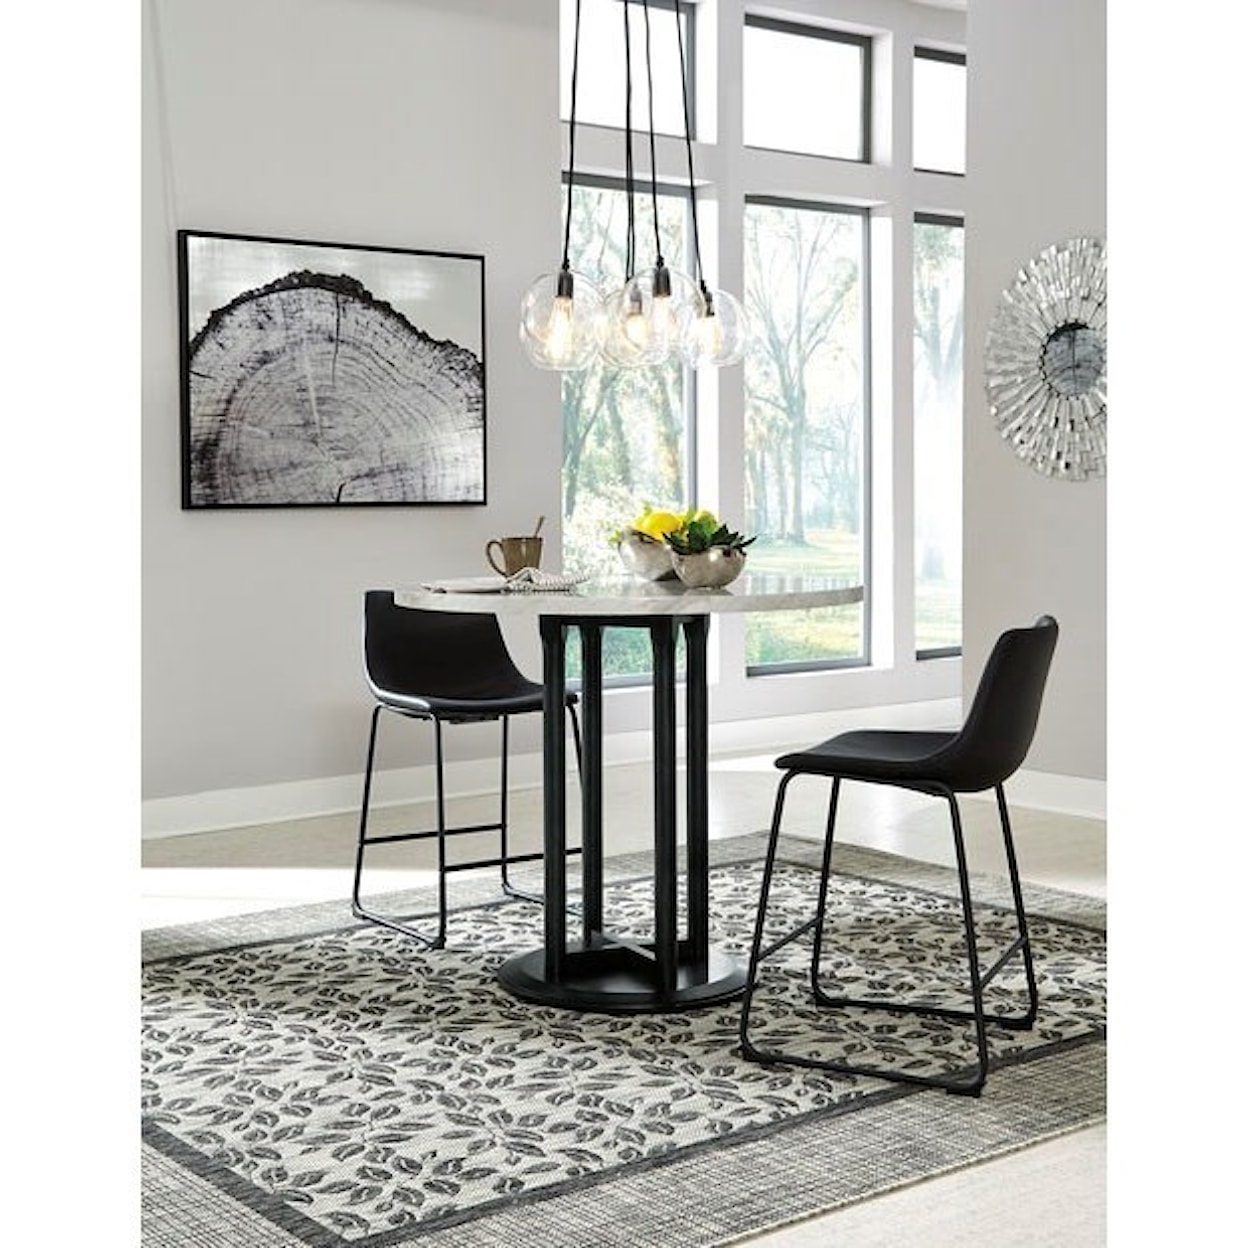 Signature Design by Ashley Furniture Centiar Upholstered Barstool